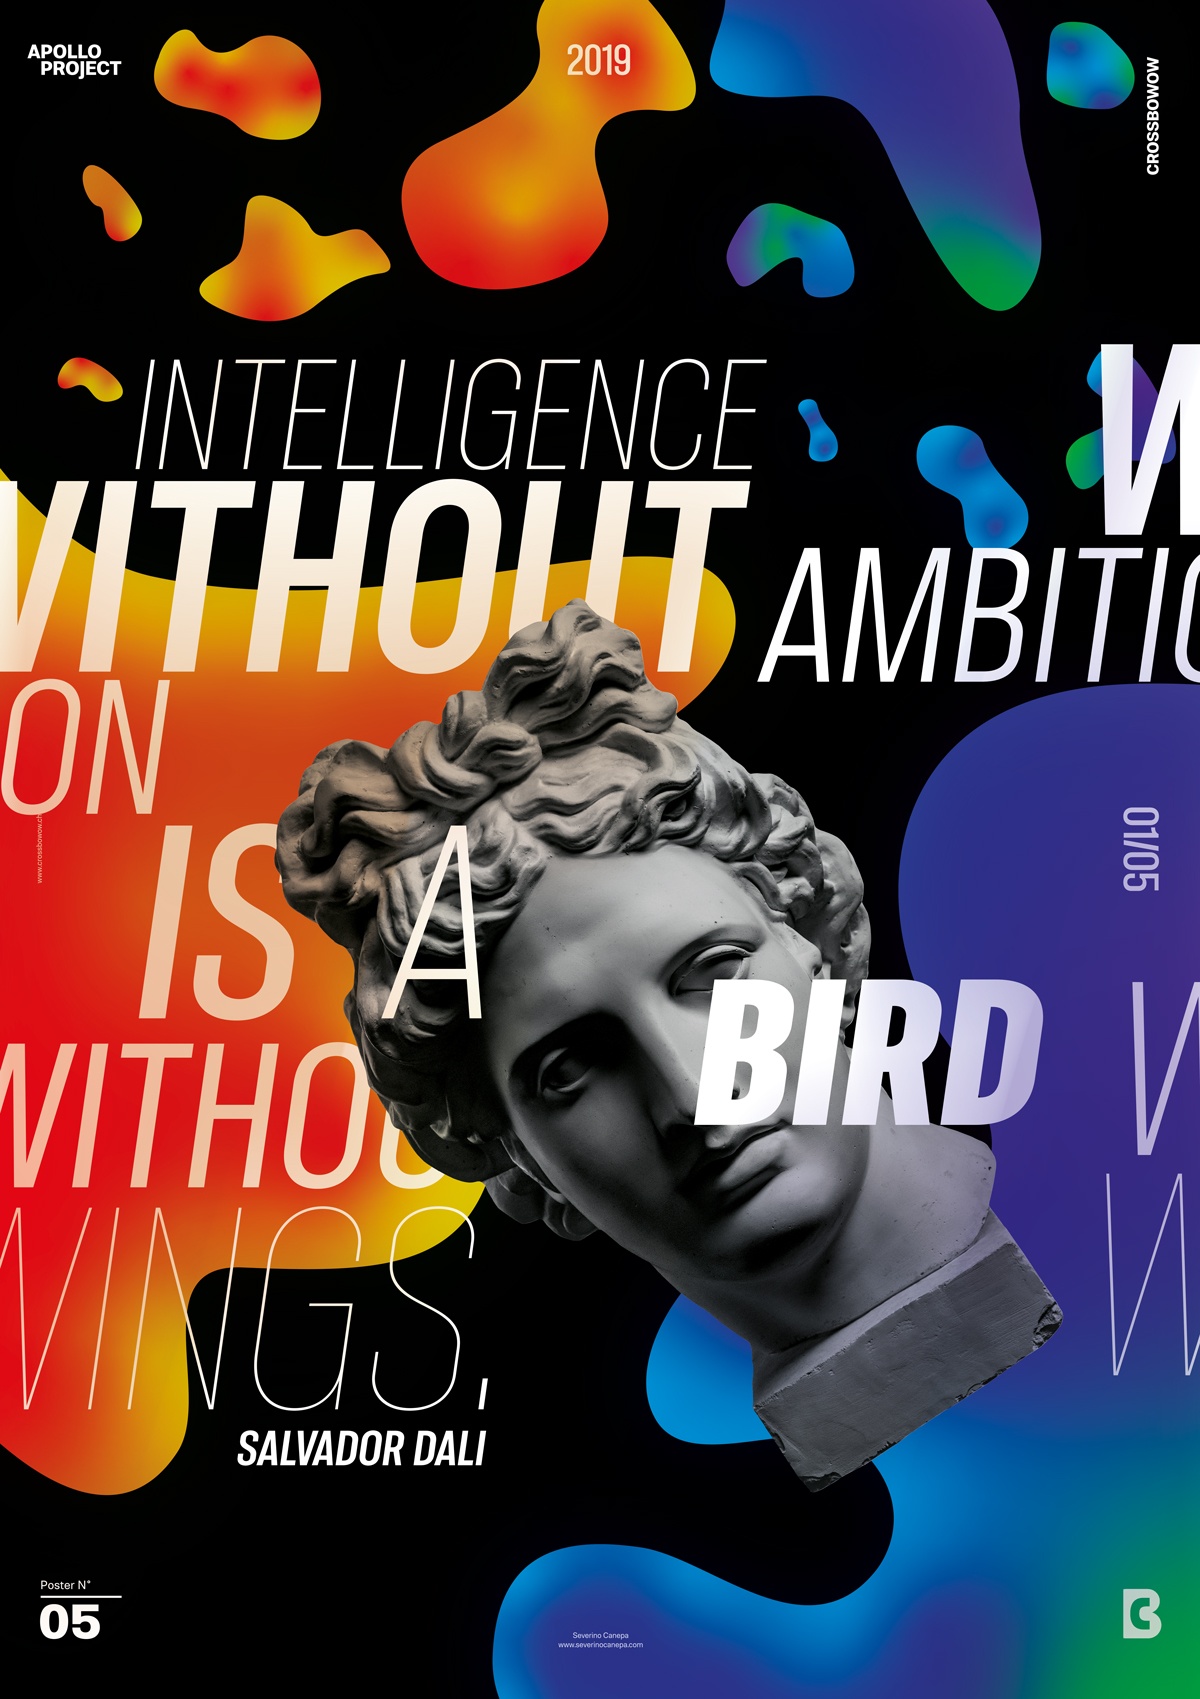 Apollo poster design challenge number 5 entitled Dali's Birds